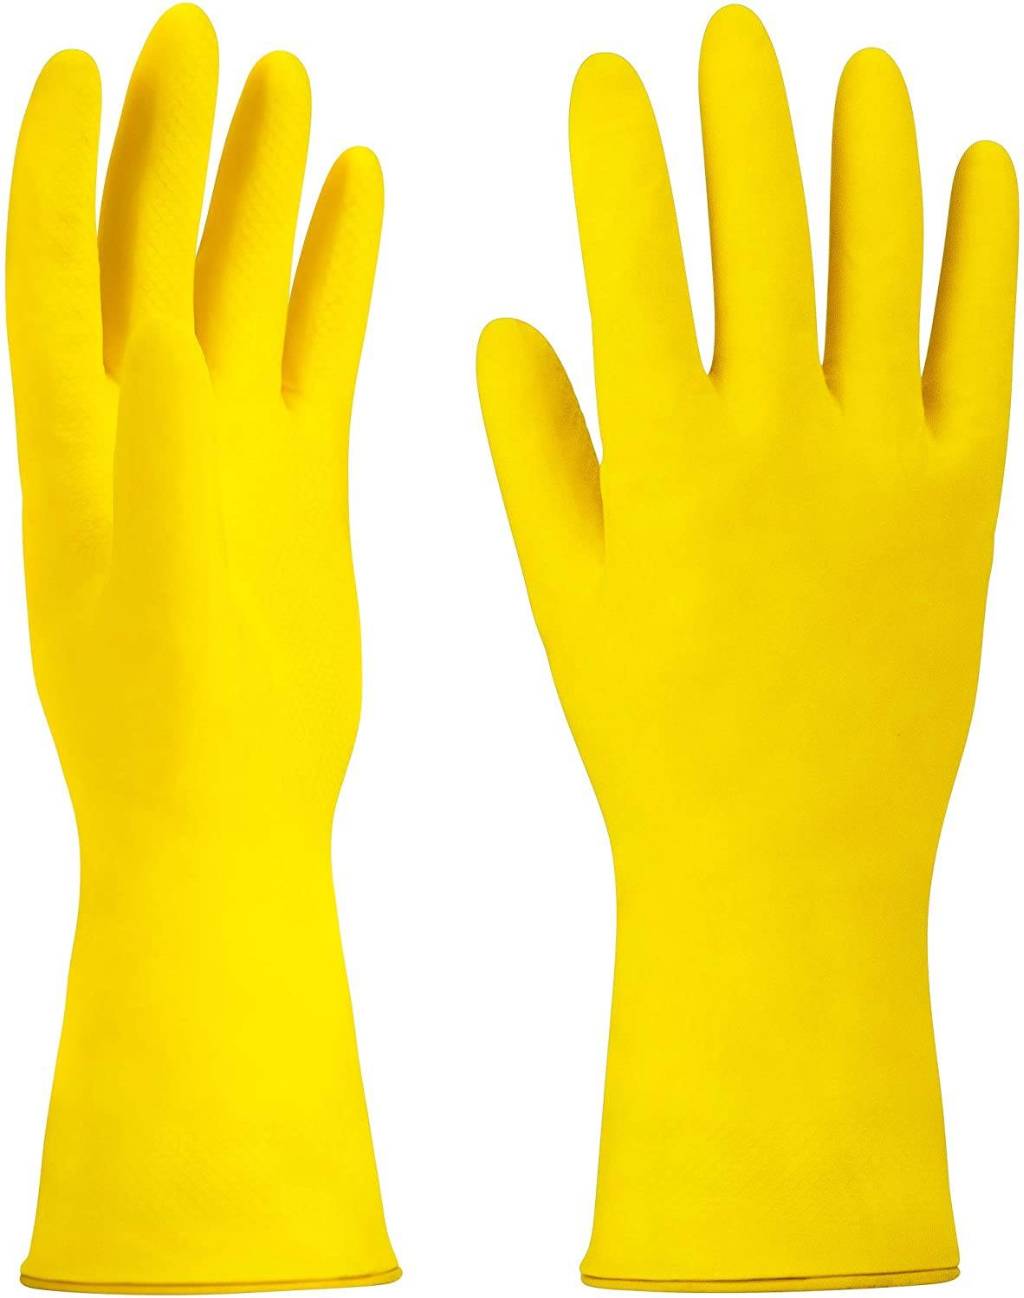 Rubber Save Gloves from Virus বাংলাদেশ - 1143241